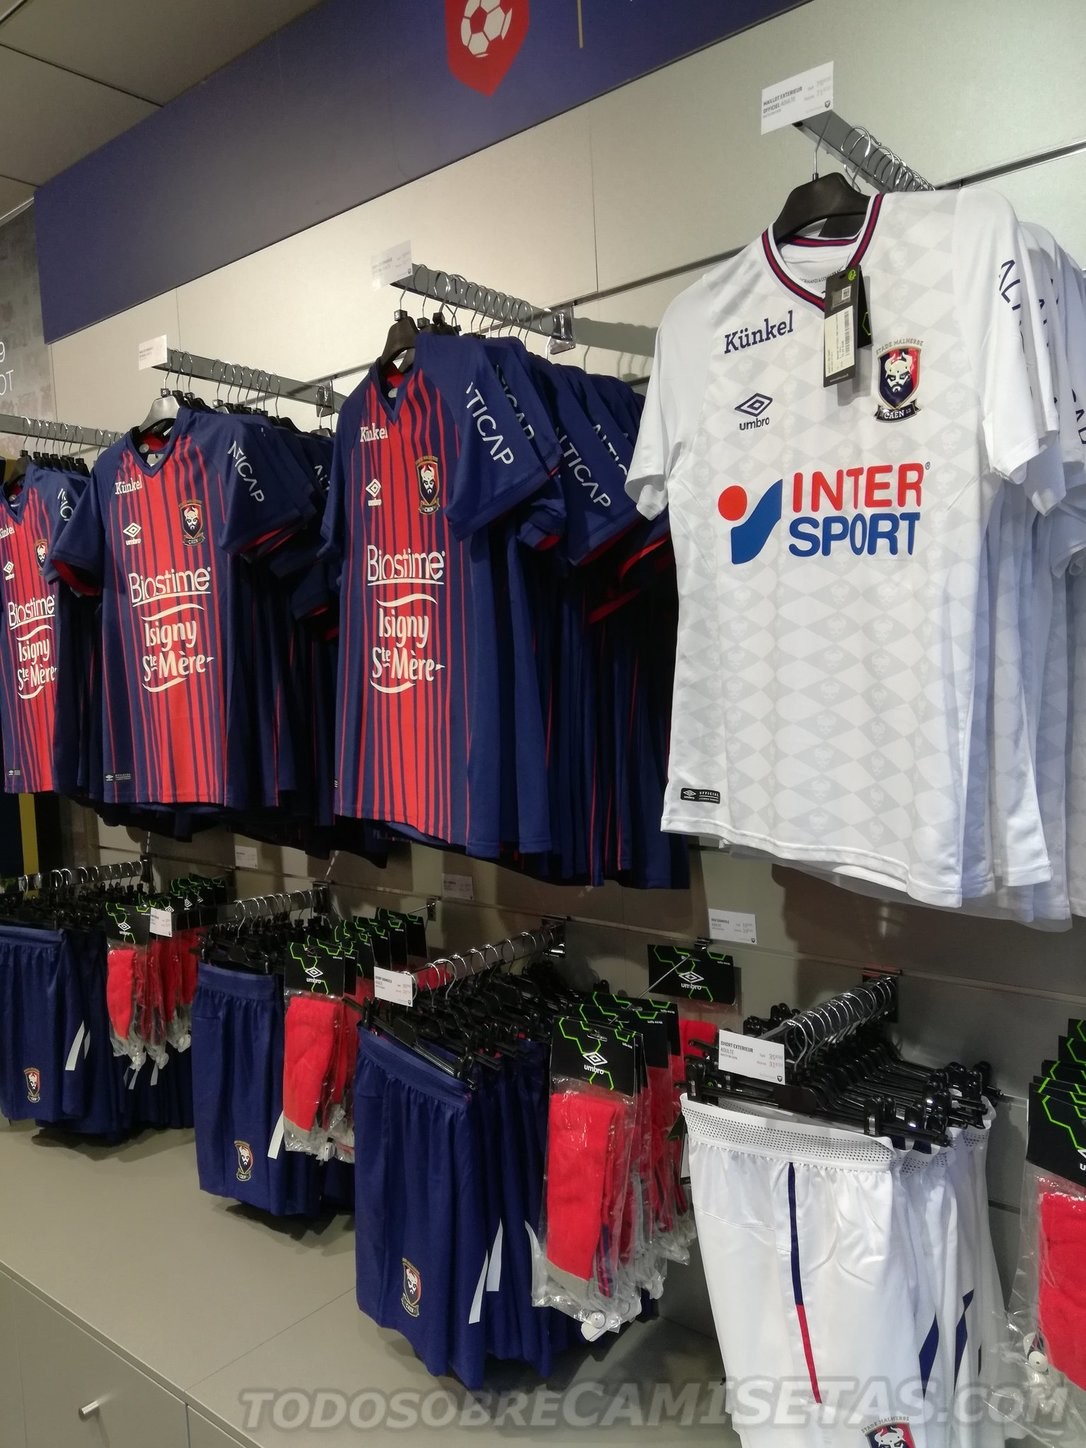 SM Caen Umbro Away Kit 2018-19